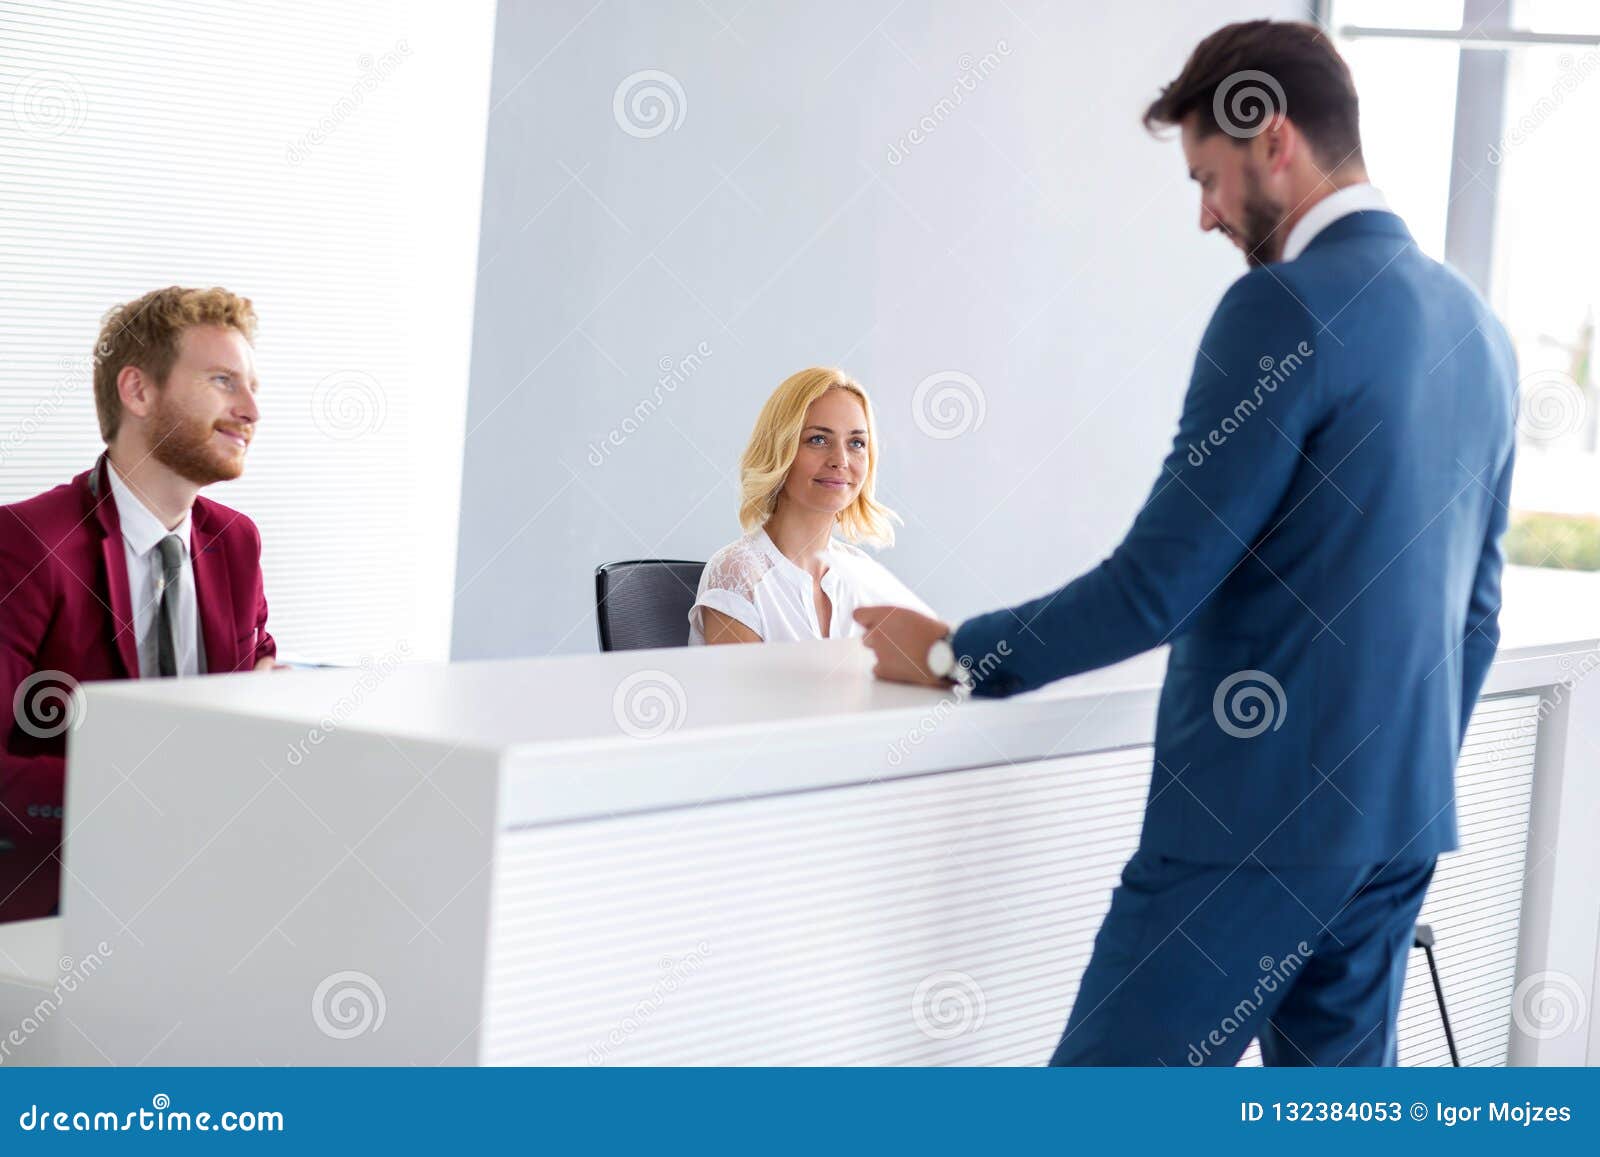 receptionists attend passenger